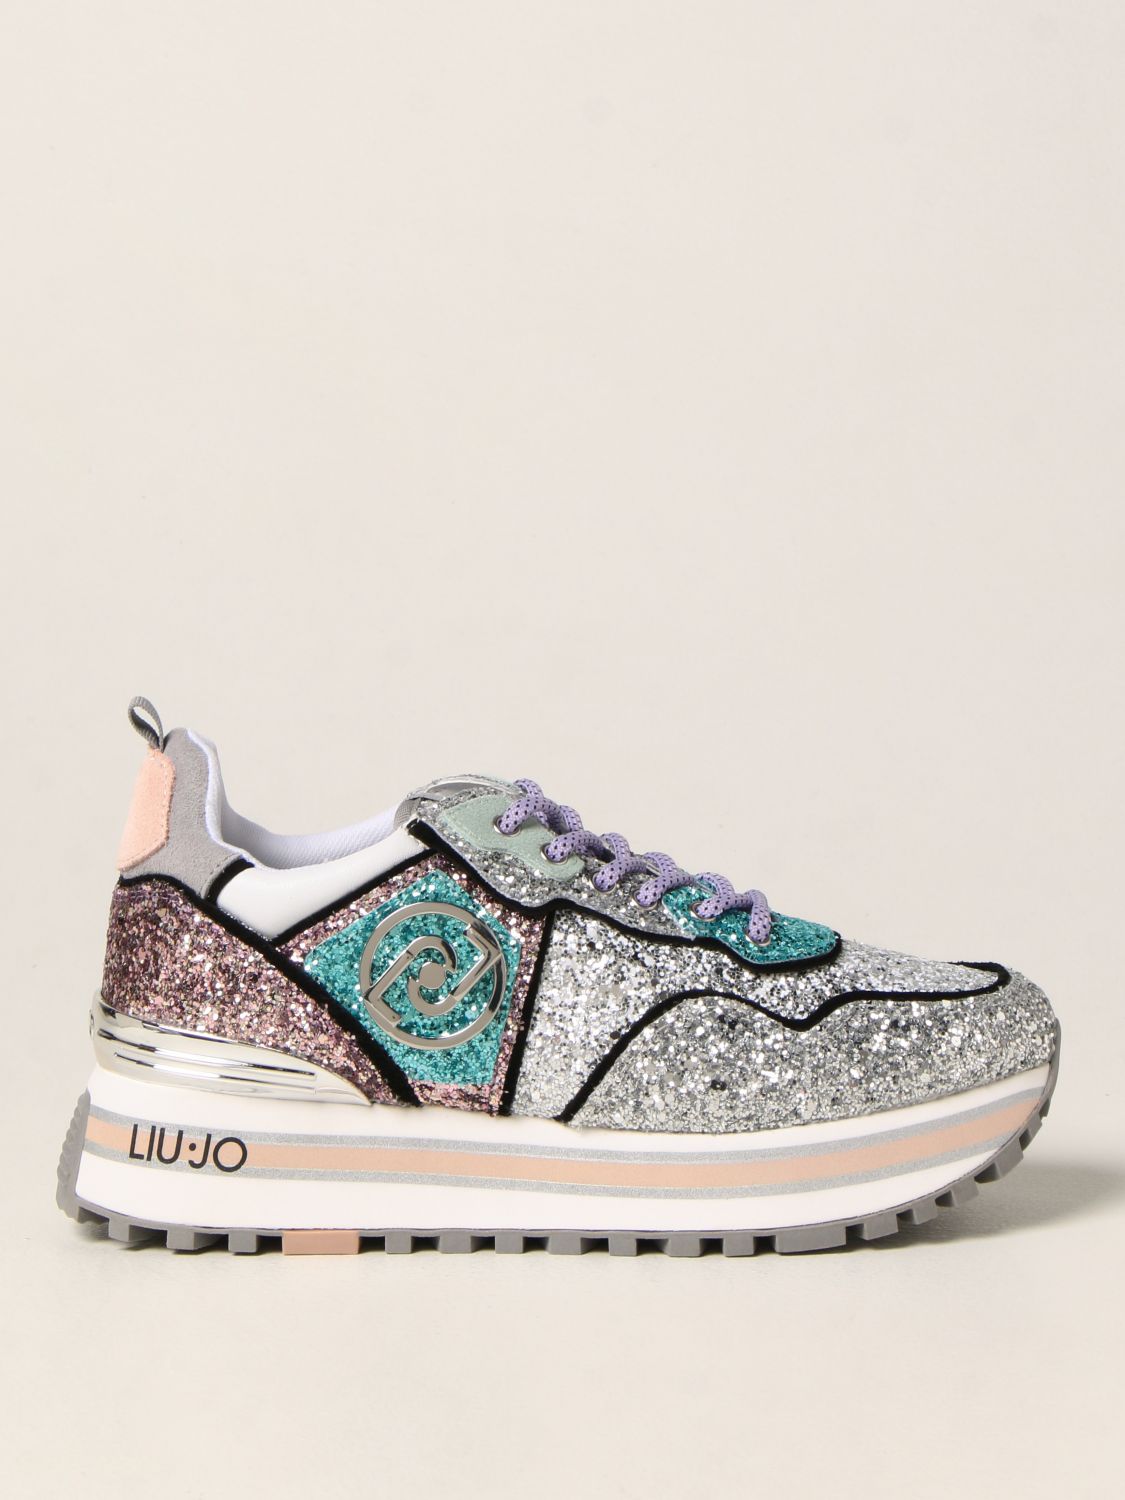 LIU JO: Maxi Wonder glitter sneakers - Silver | Liu Jo sneakers ...